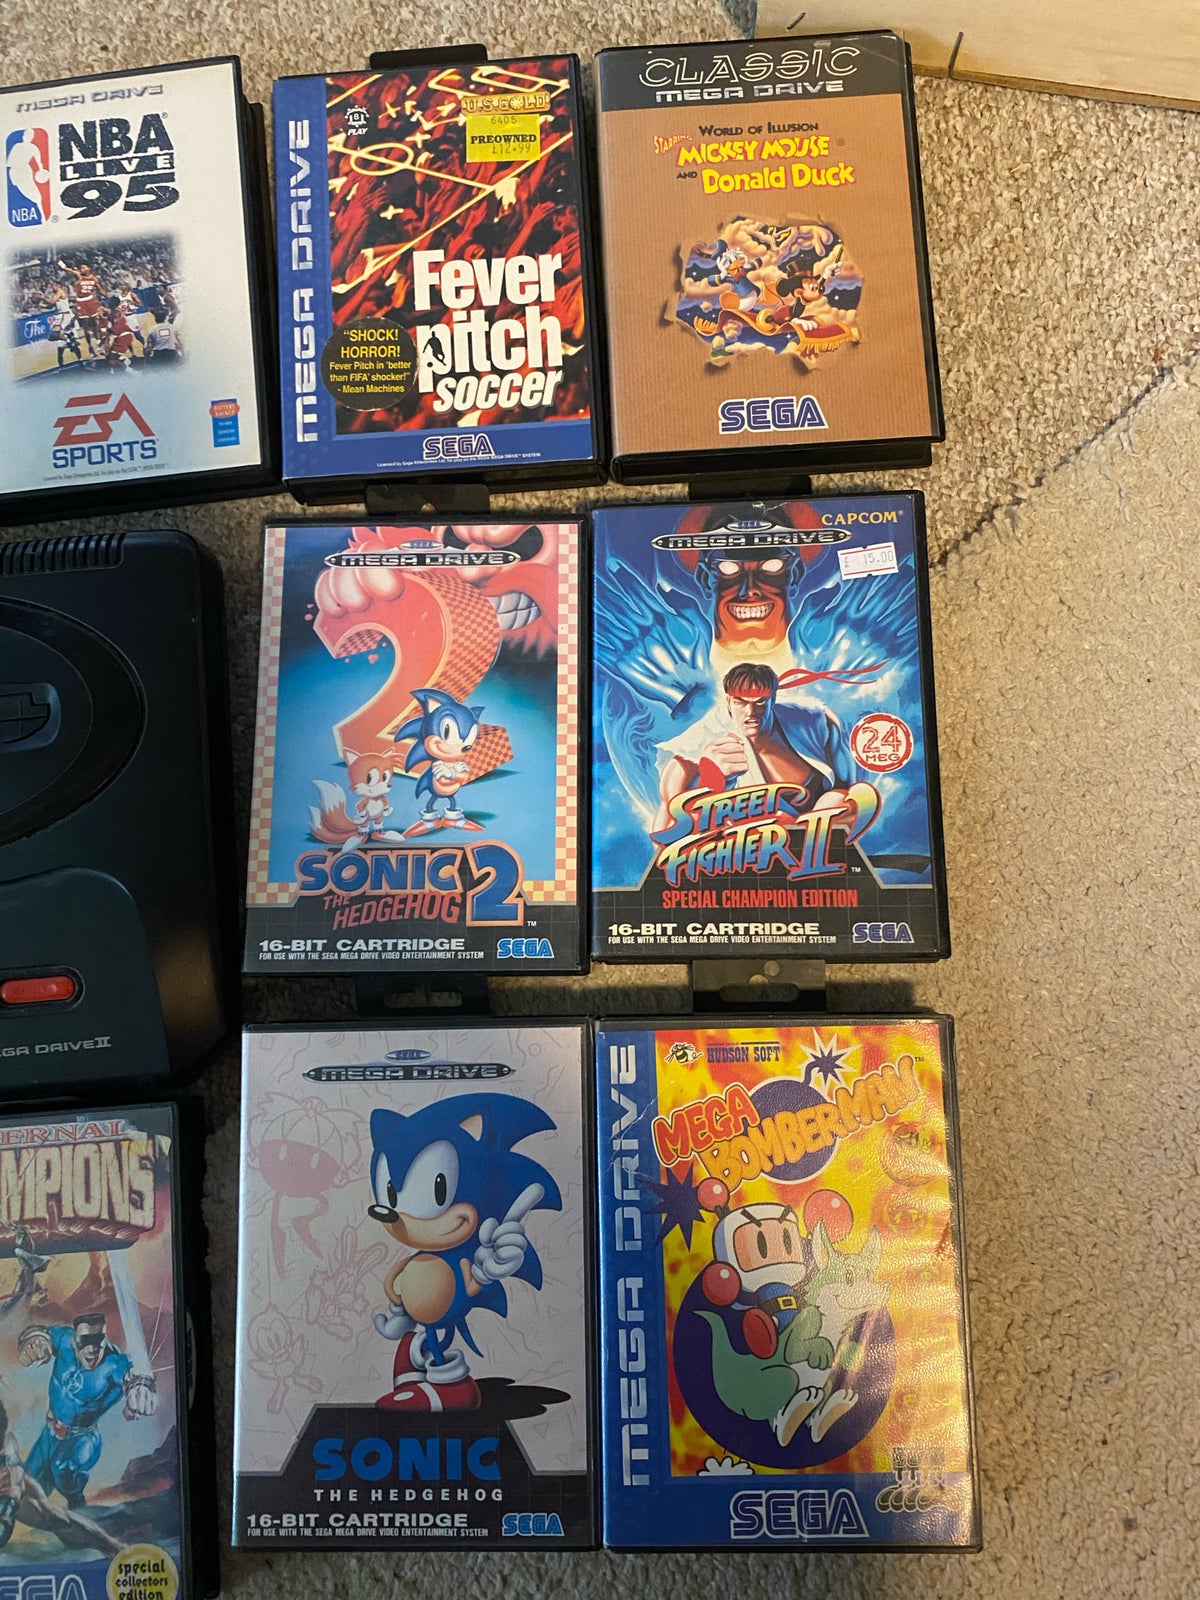 Sega Mega Drive, spillekonsol, God